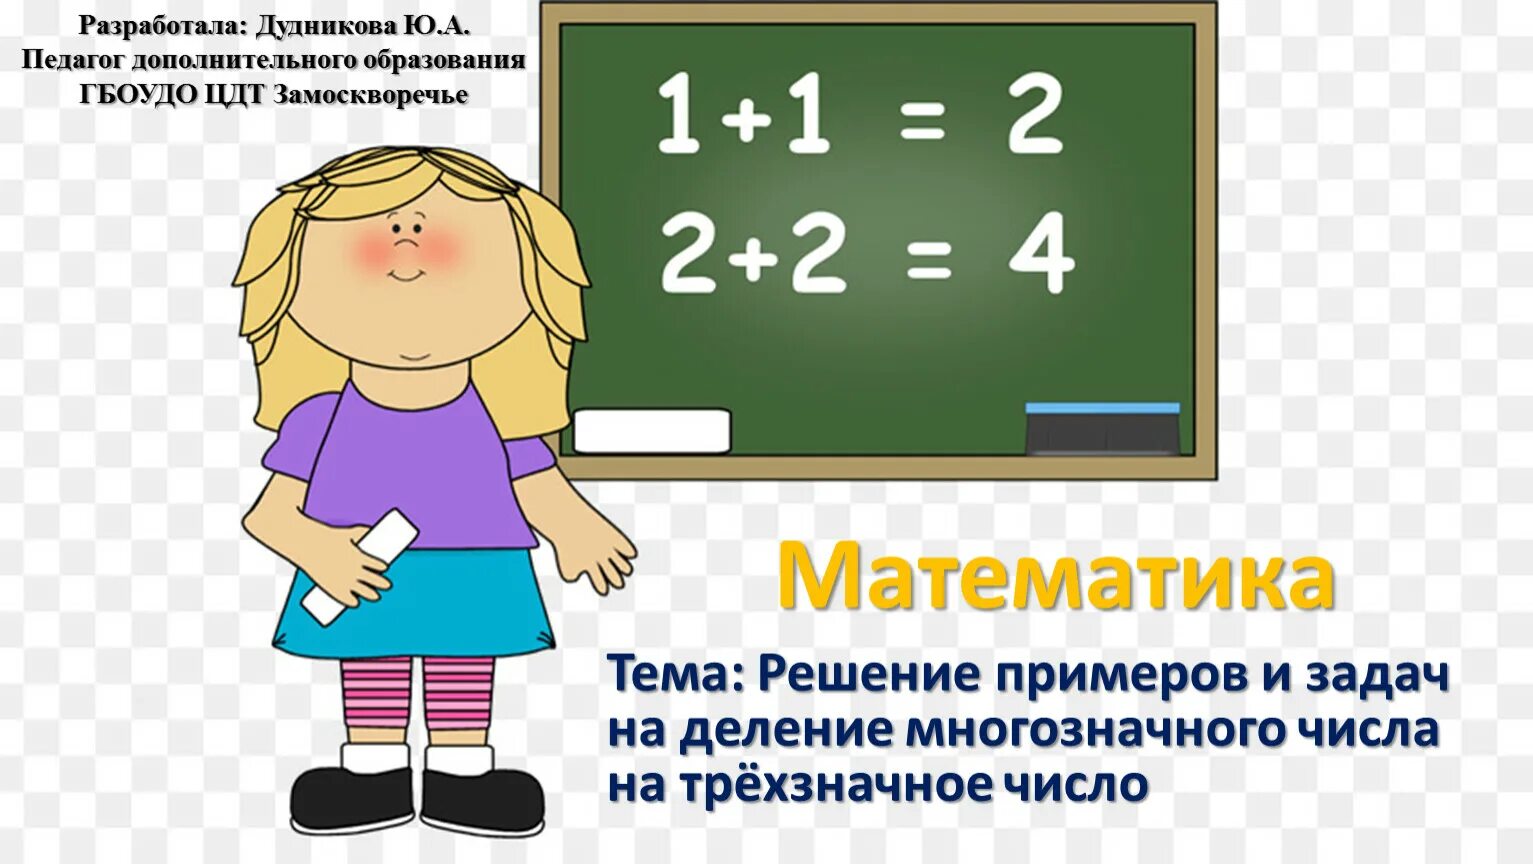 Рисунки для математики. Урок математики картинка. Математические картинки для презентаций. Картинки про математику для детей.